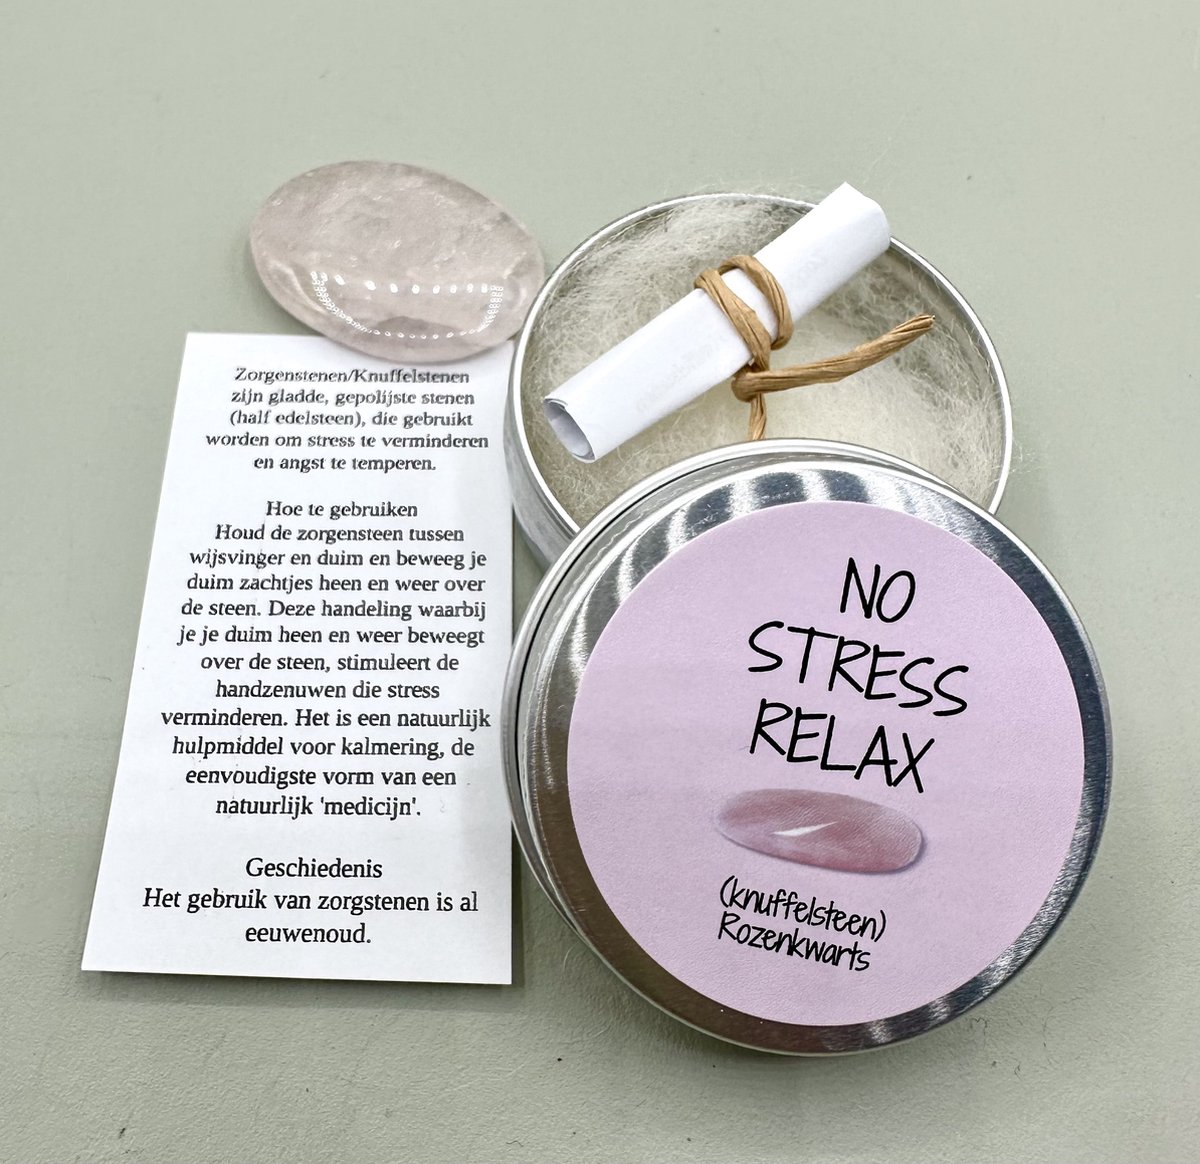 NO STRESS RELAX knuffelsteensteen,rozenkwarts, edelsteen,knuffelsteen,zorgensteen, klein kadootje,stres,rust,relax,ontspannen, yoga,collega,personeel,vrienden,